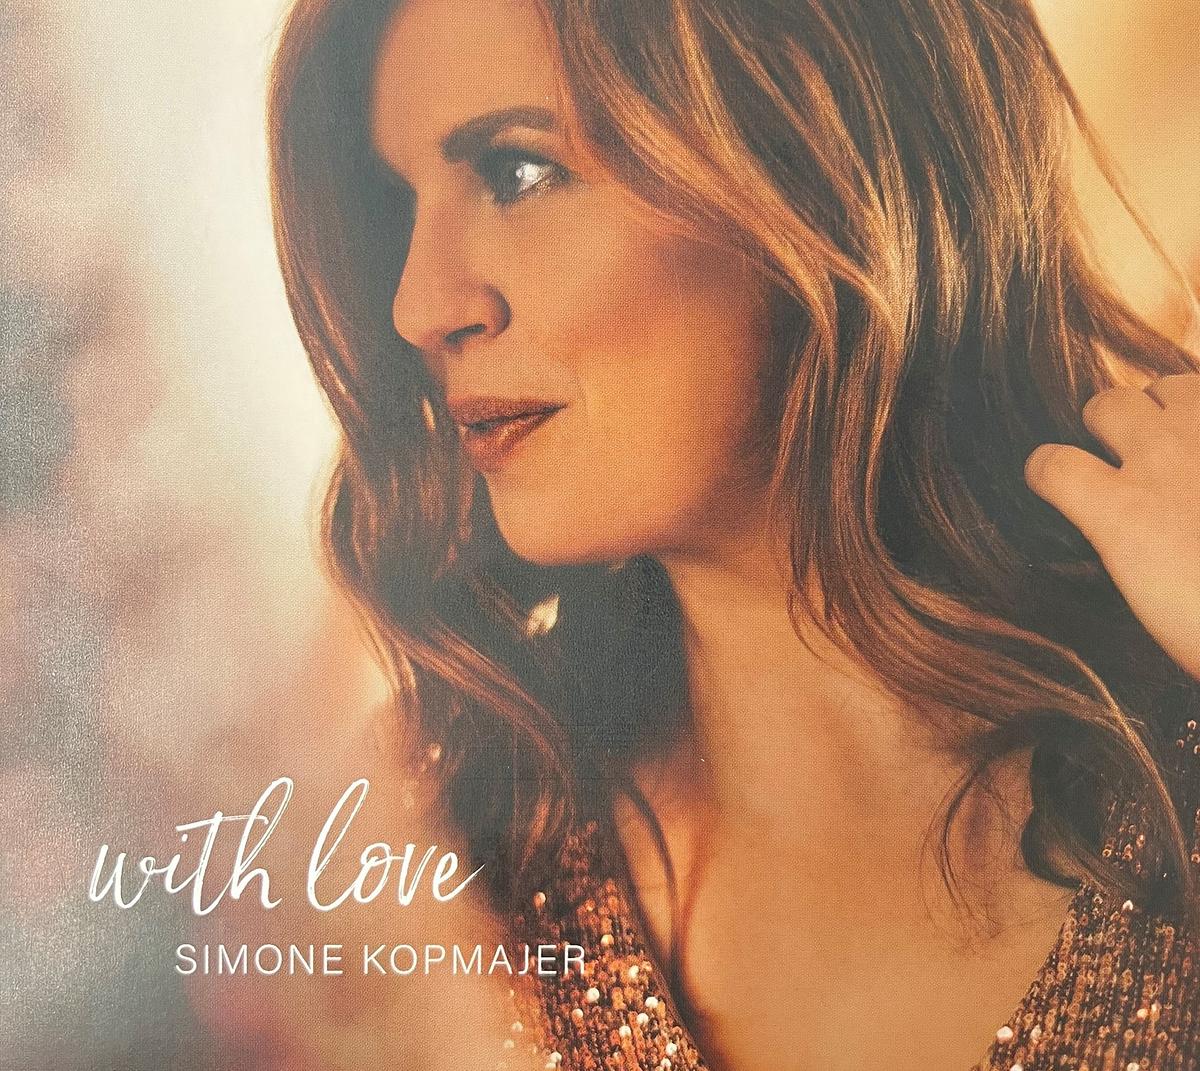 Simone Kopmajer "with love"